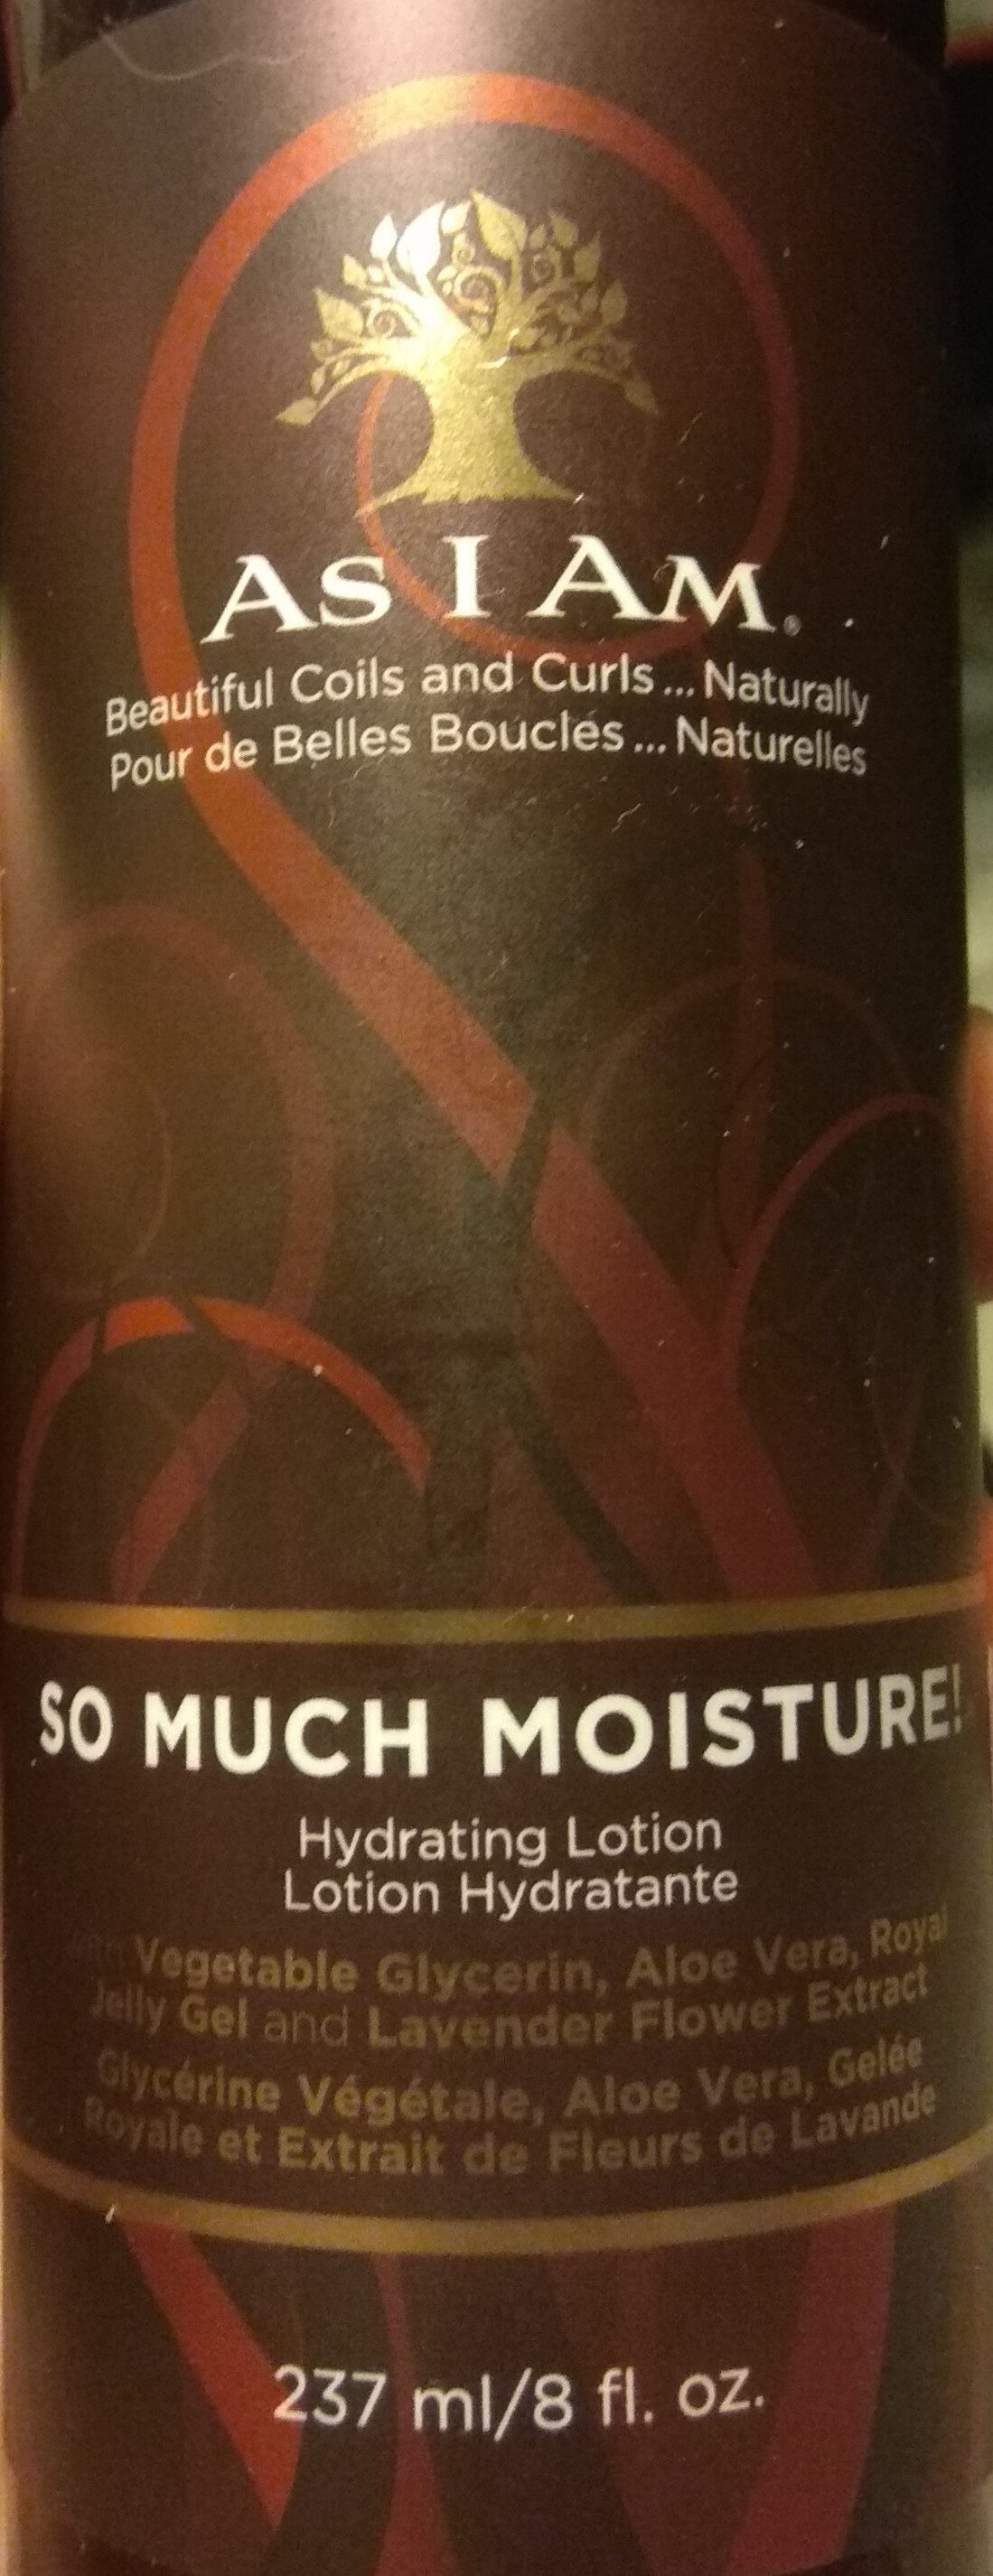 So much moisture! - Produit - fr